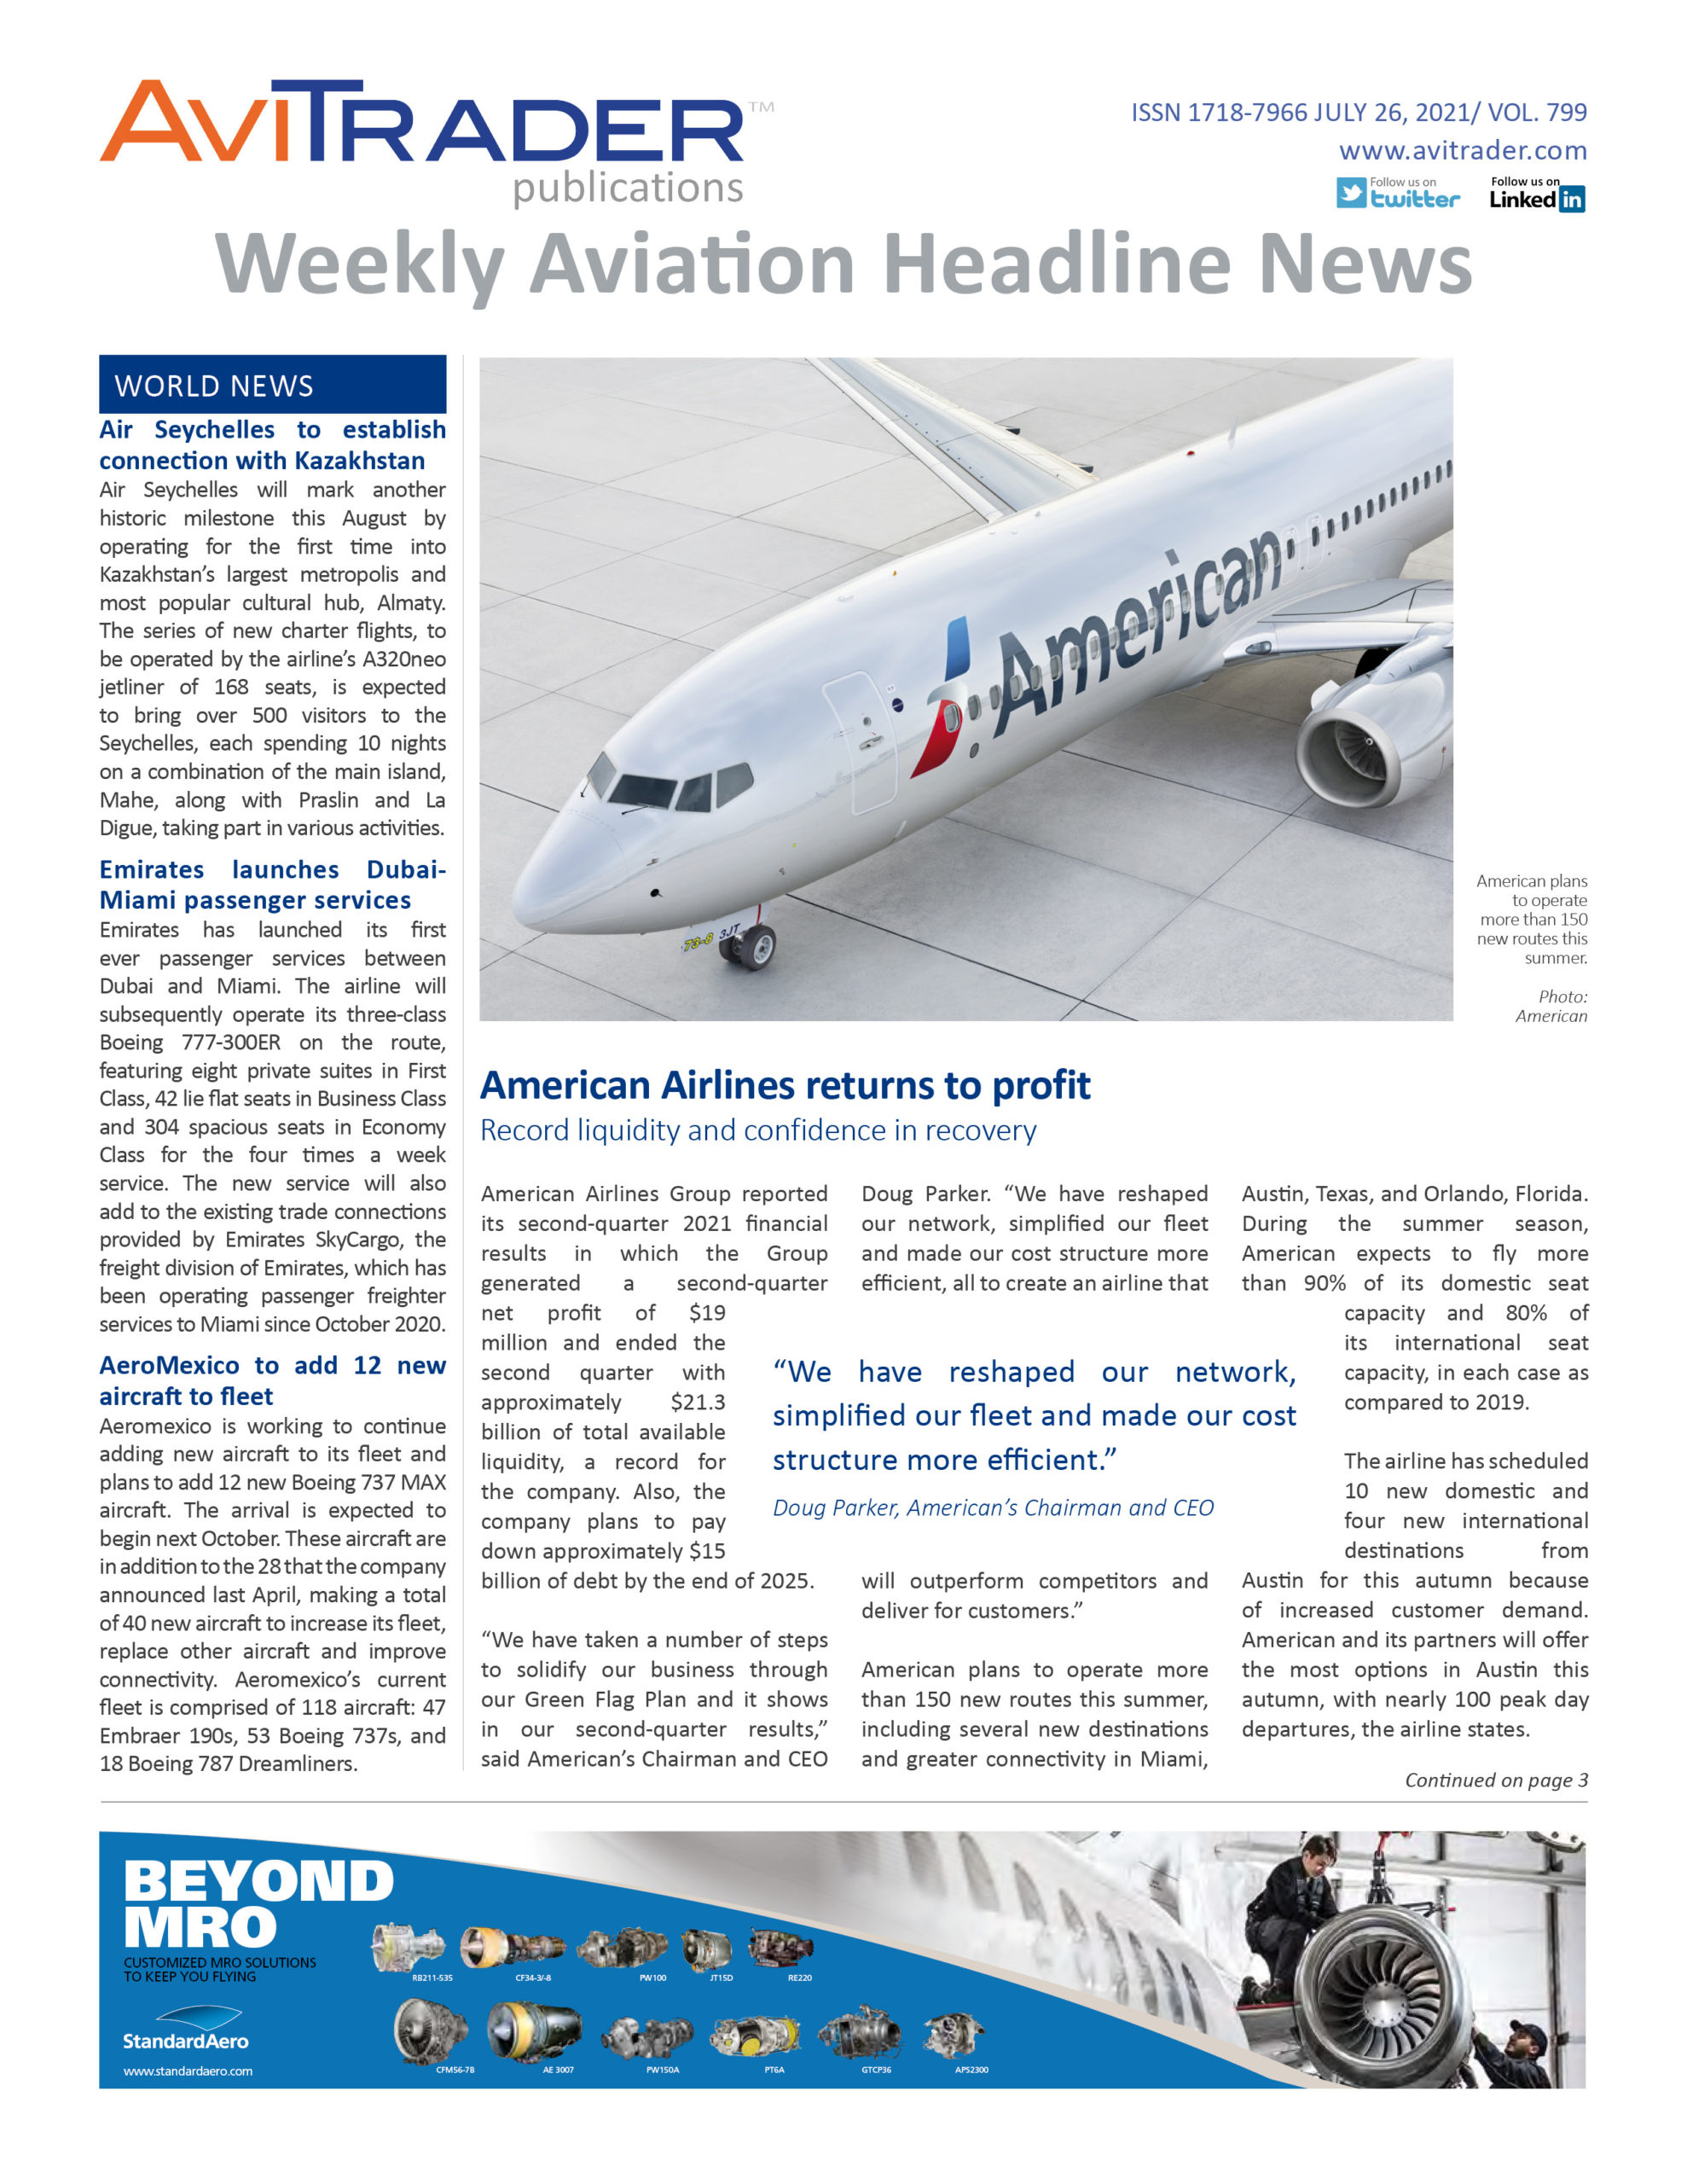 AviTrader_Weekly_Headline_News_Cover_2021-07-26